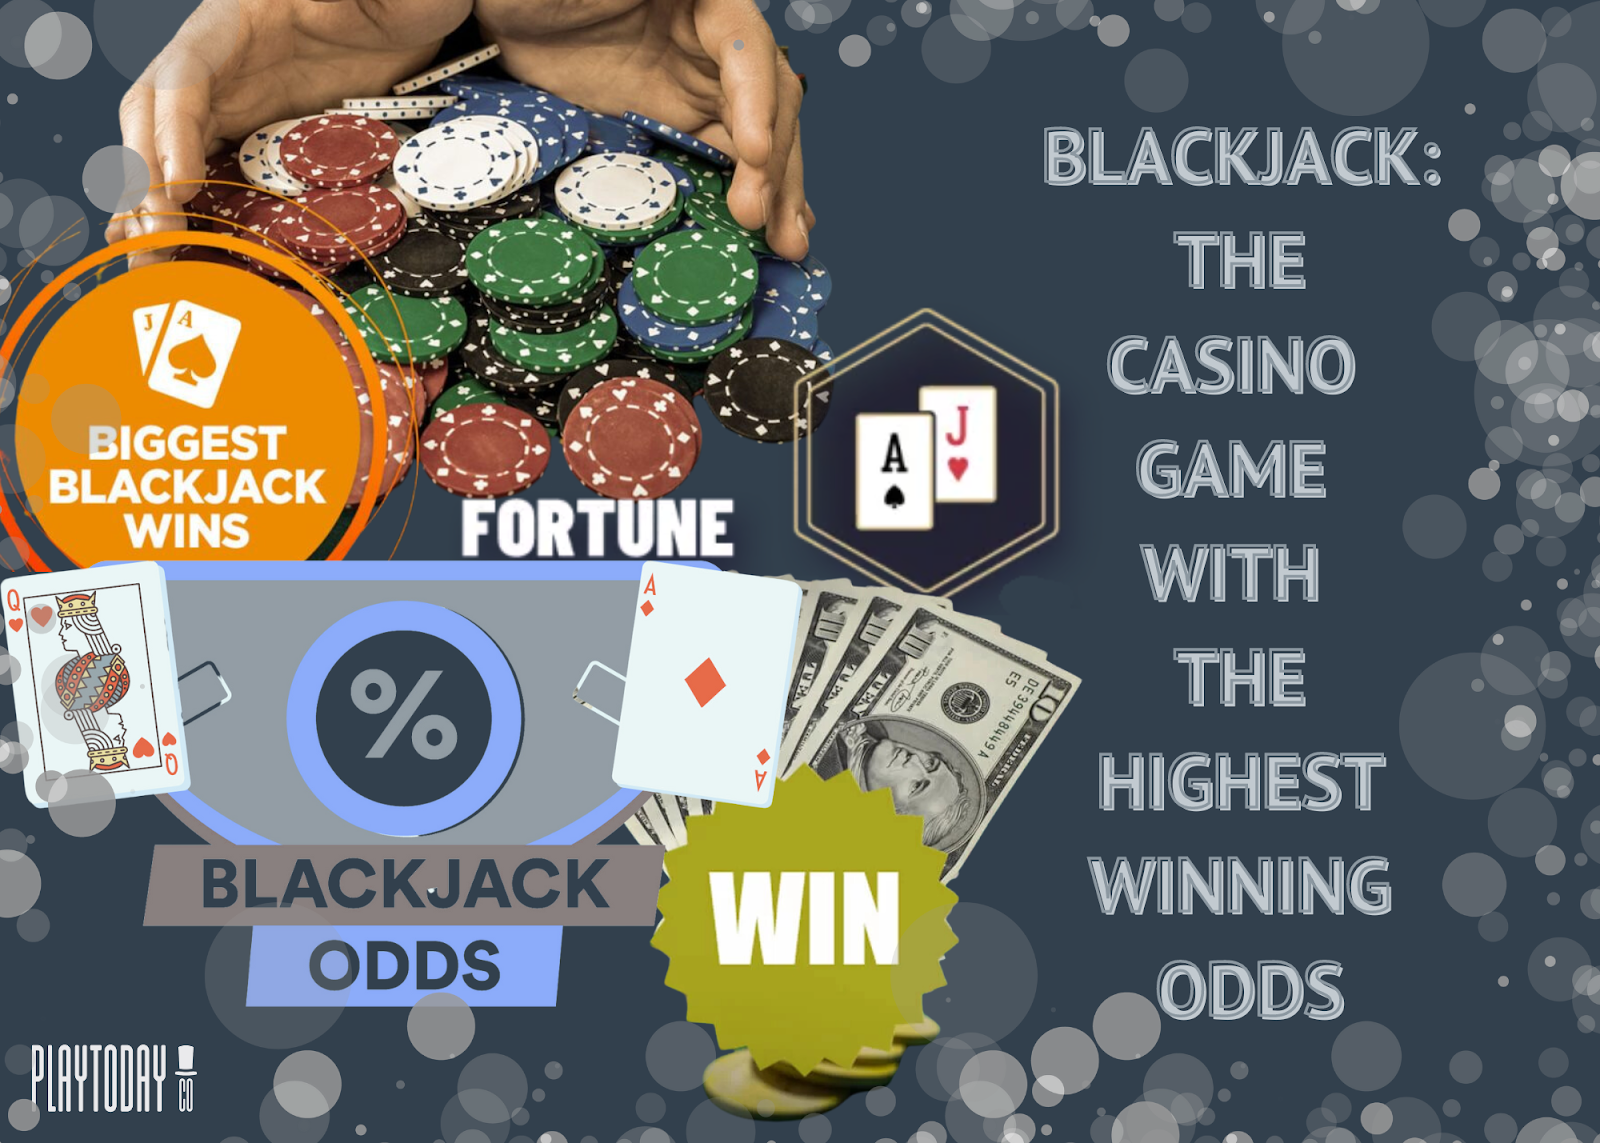 Blackjack game has the highest winning odds